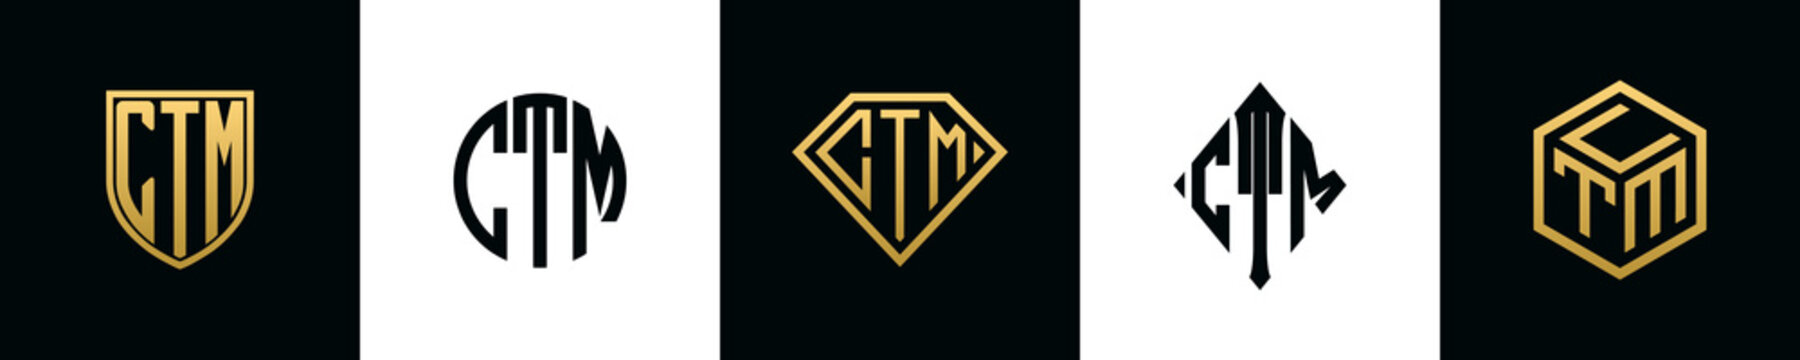 CTM shield with round shape logo design vector template, monogram logo, abstract logo, wordmark logo, lettermark logo, business logo, brand  logo, flat logo. Stock Vector